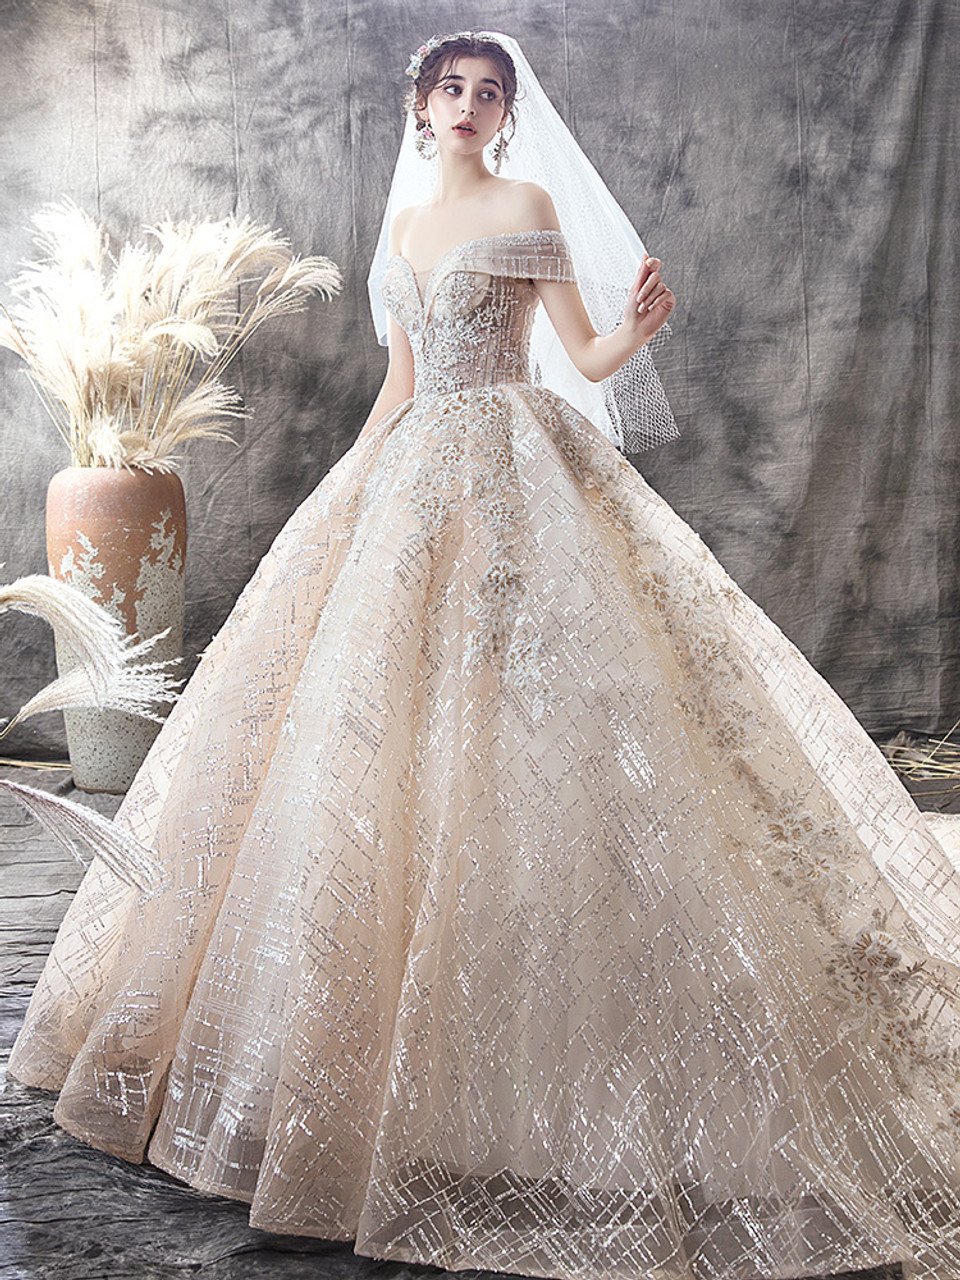 Affordable Wedding Dresses: Stunning Styles Under $500